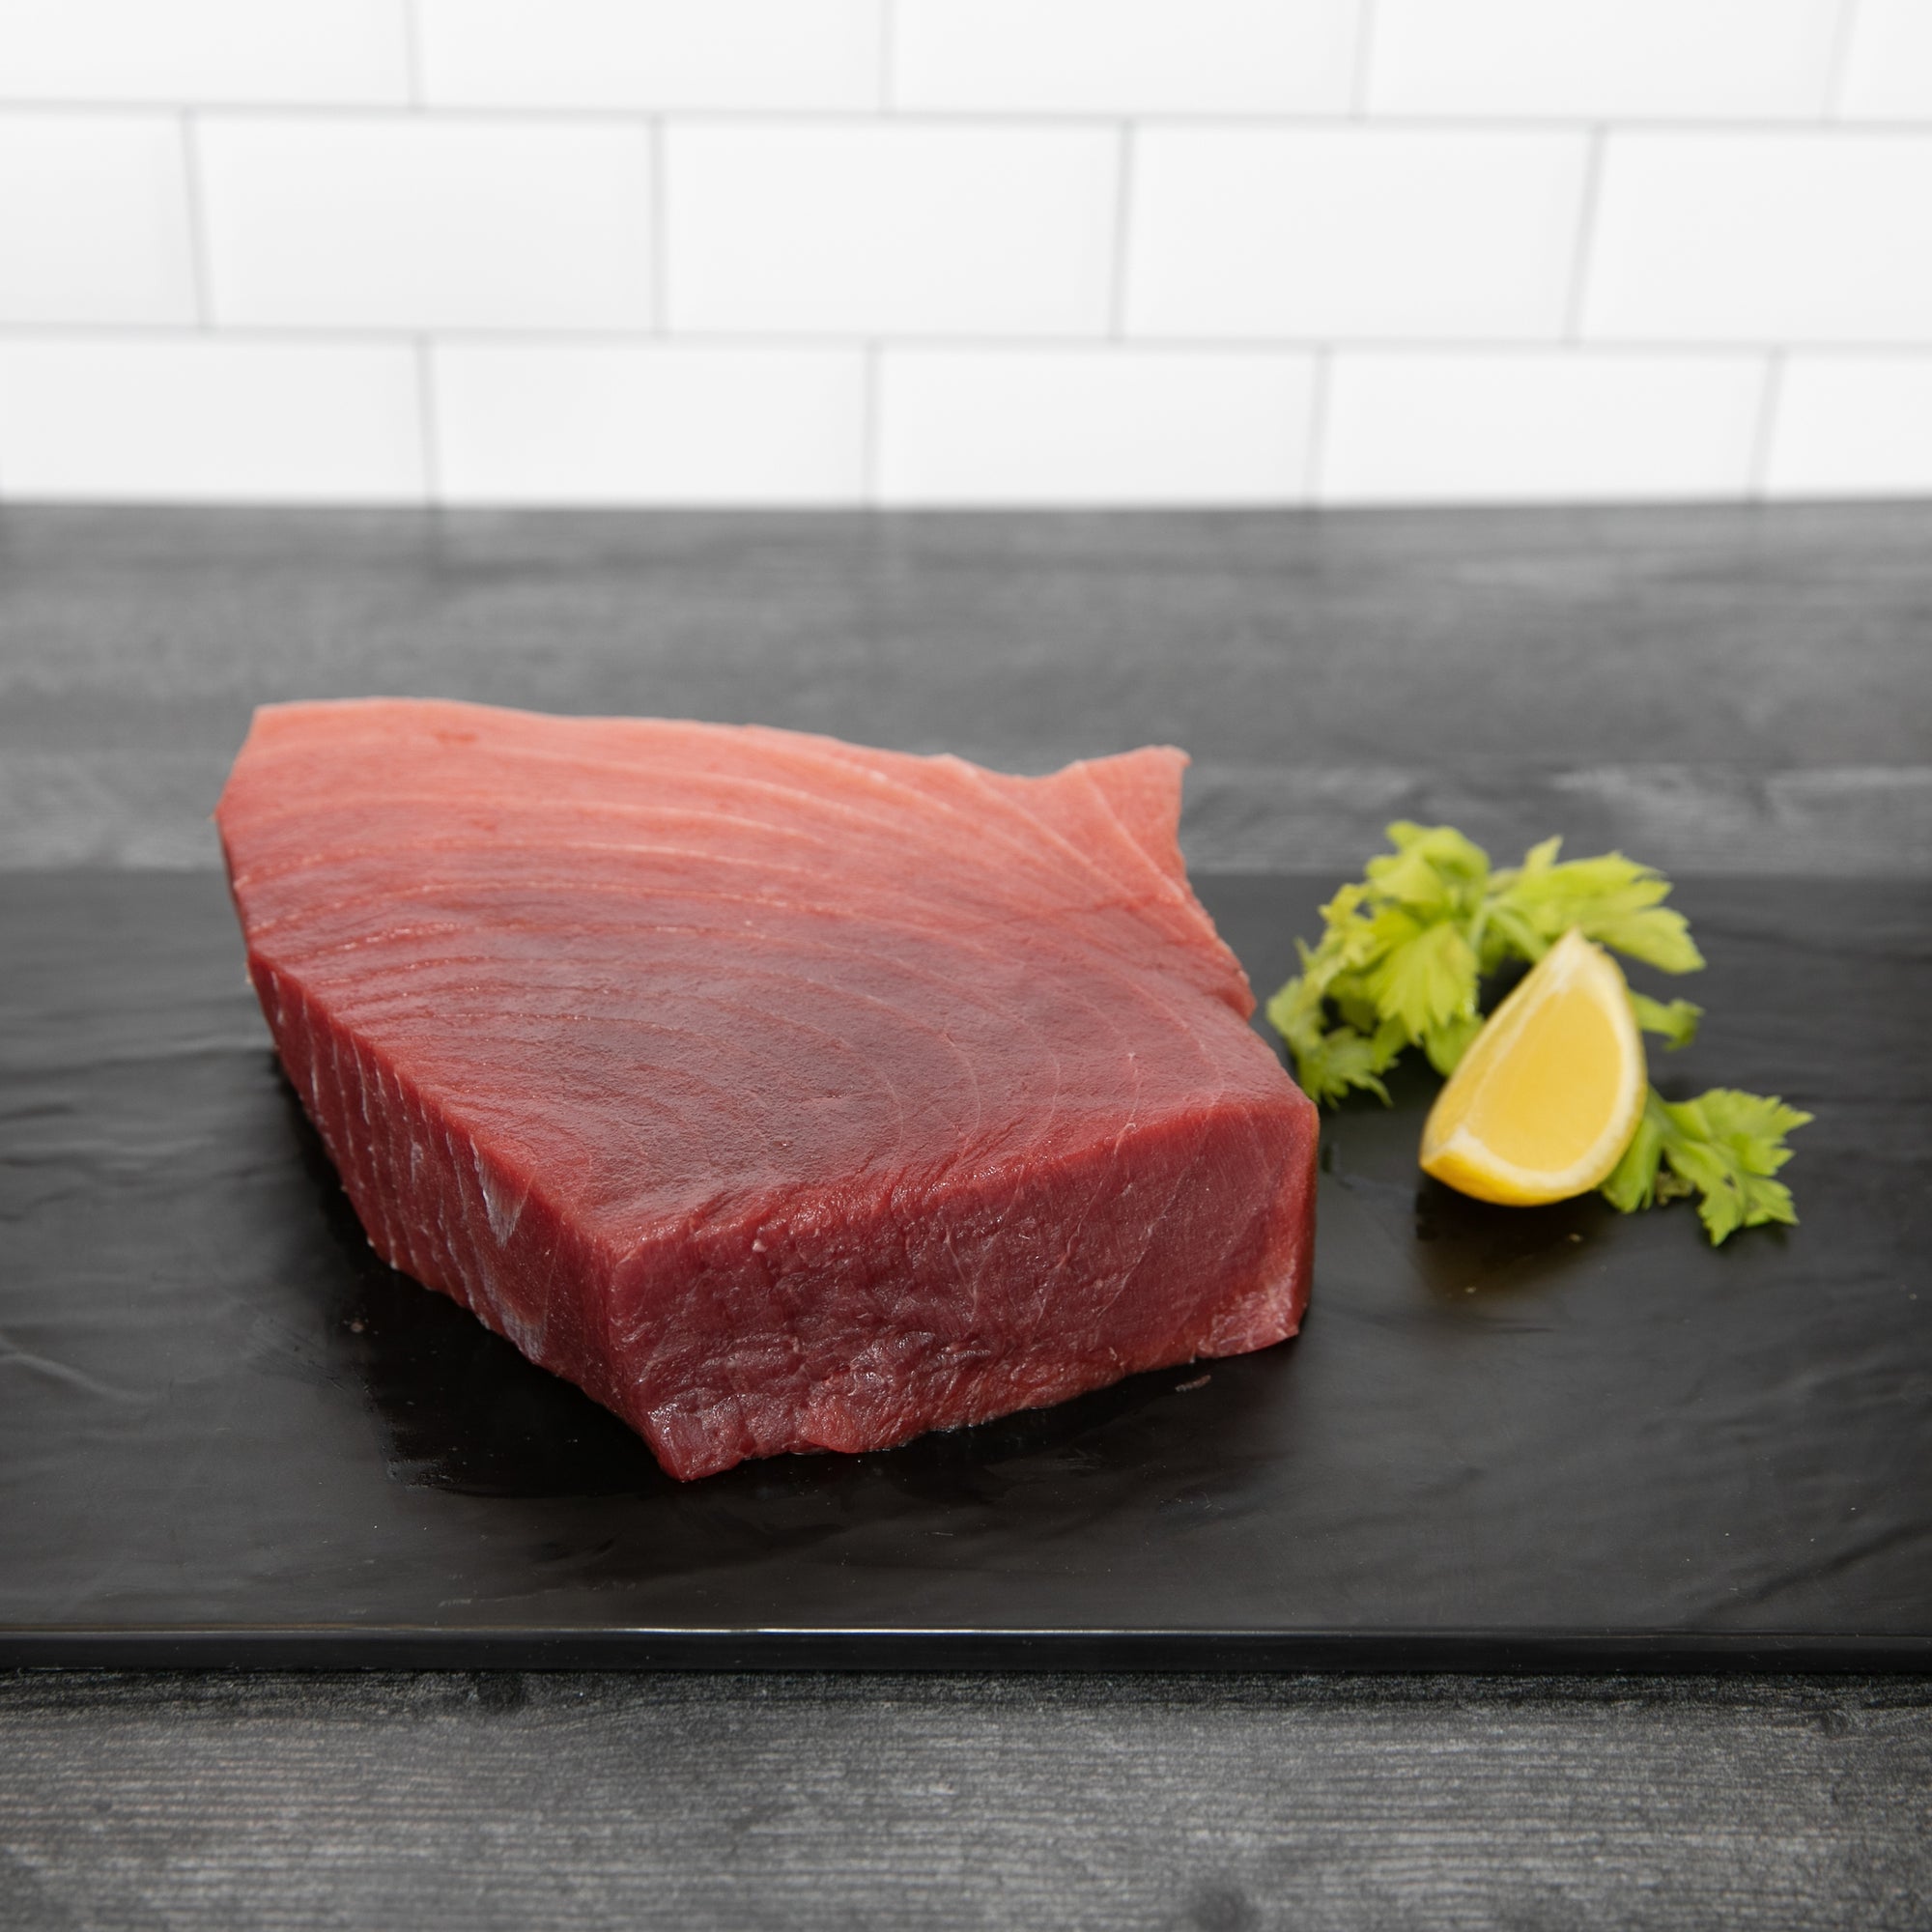 Buy sushi grade tuna online